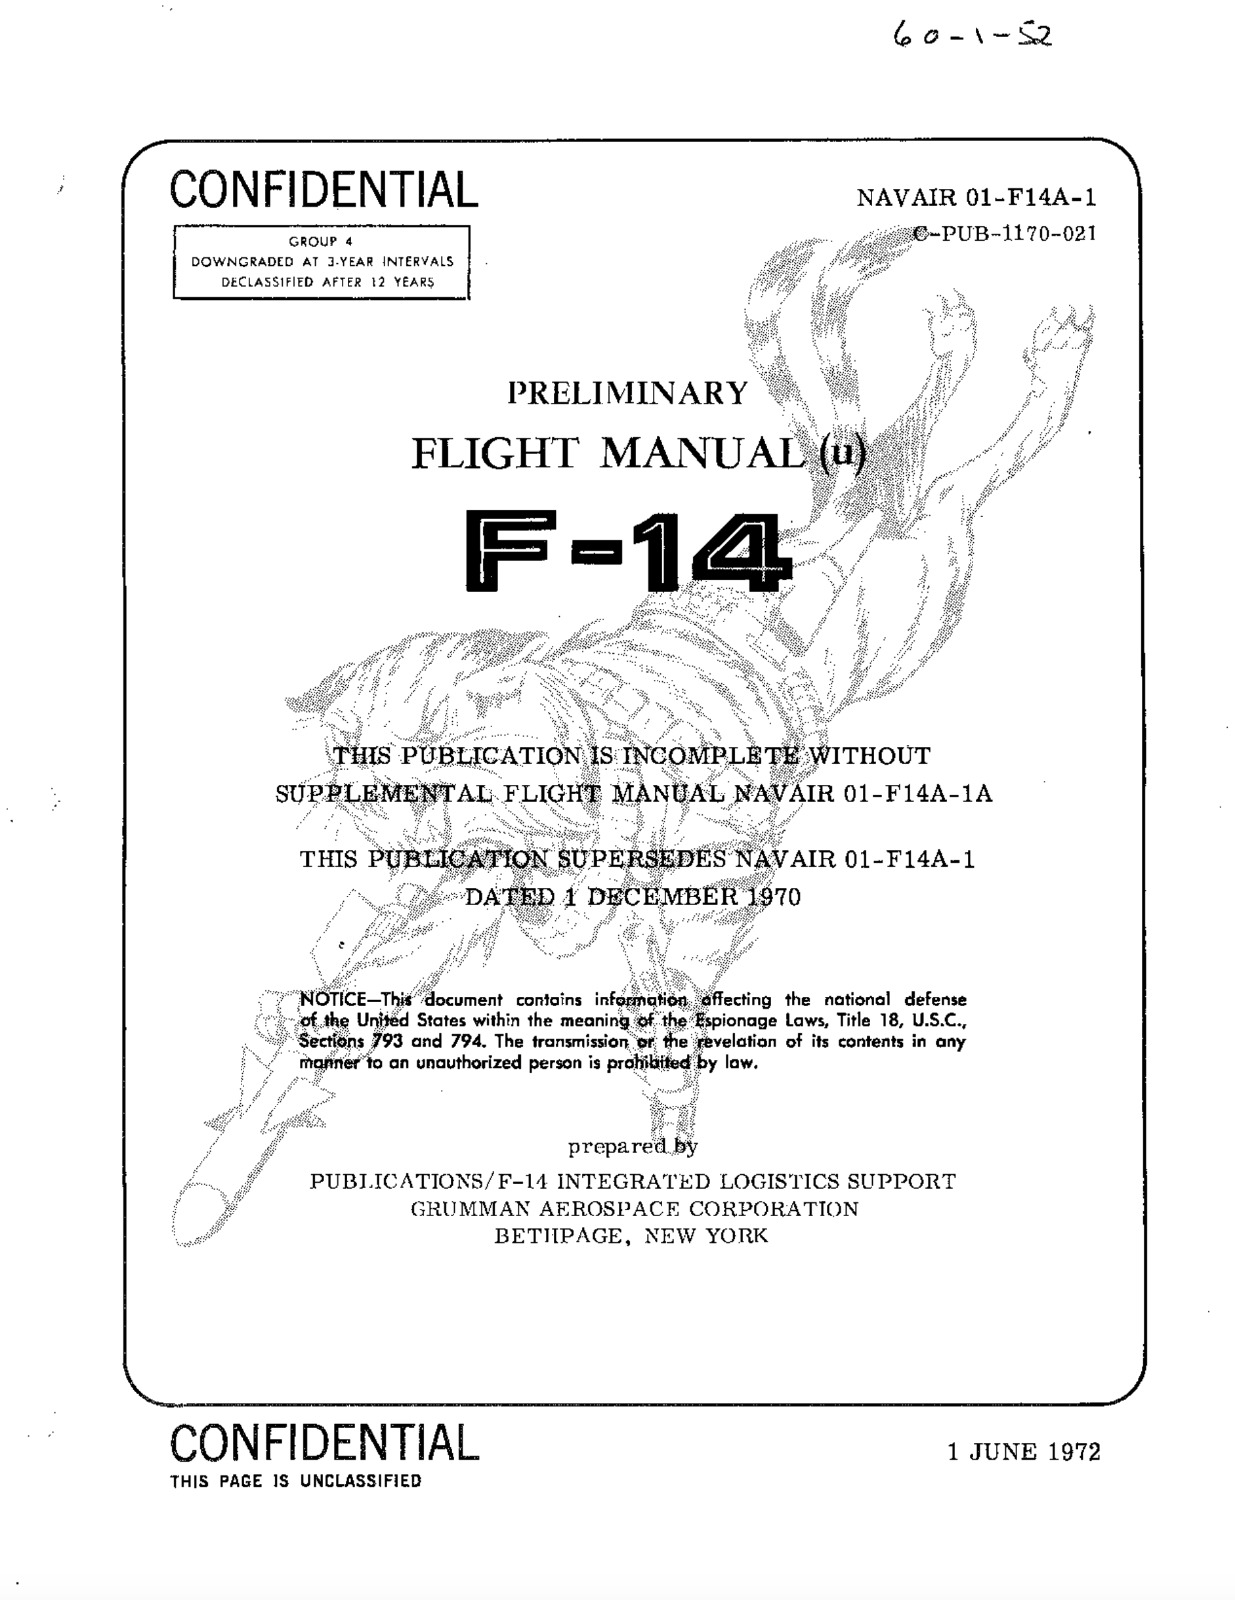 458 Page June 1972 F-14 TOMCAT NAVAIR 01-F14A-1 Preliminary Flight Manual on CD